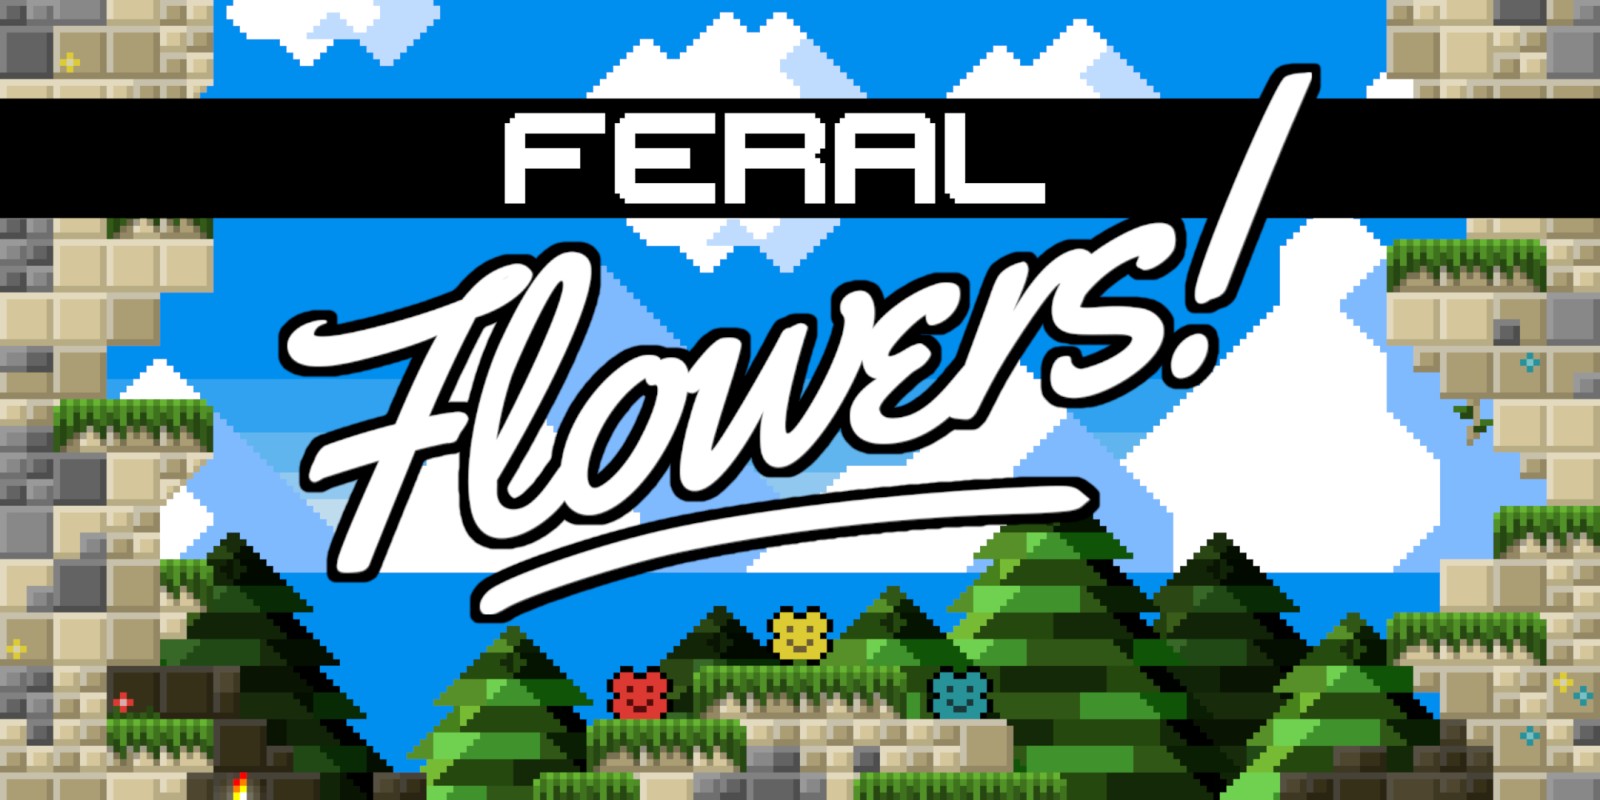 Feral Flowers